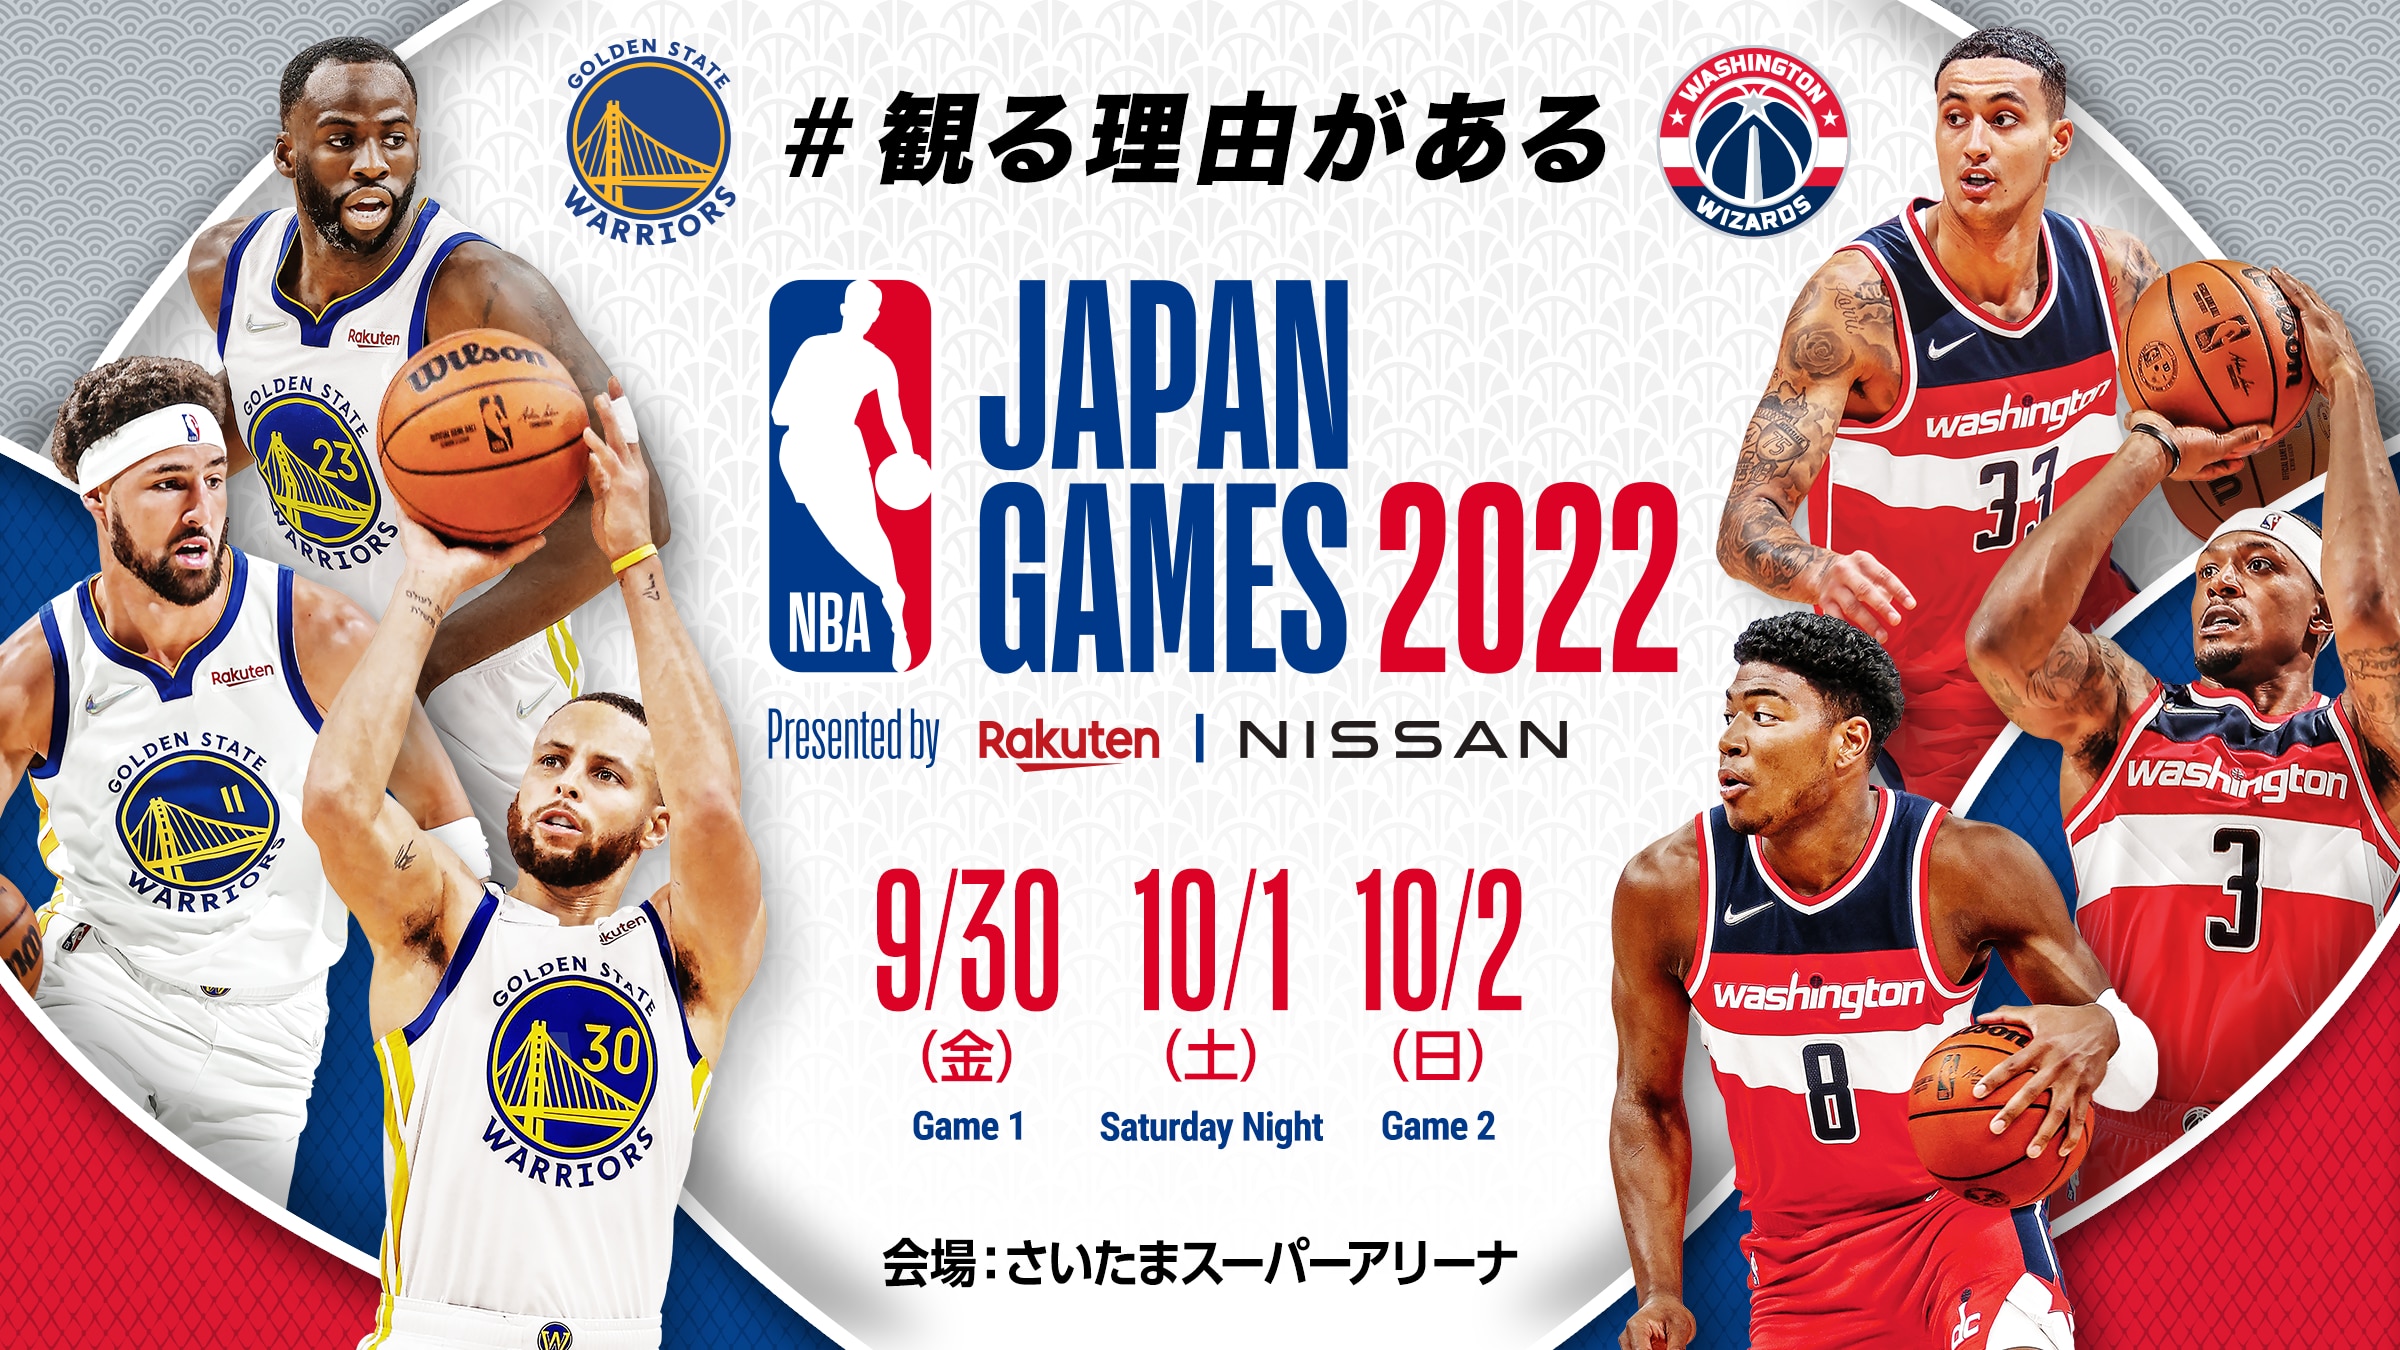 NBA Japan Games」のタイトルパートナーに日産が就任 | NBA Rakuten